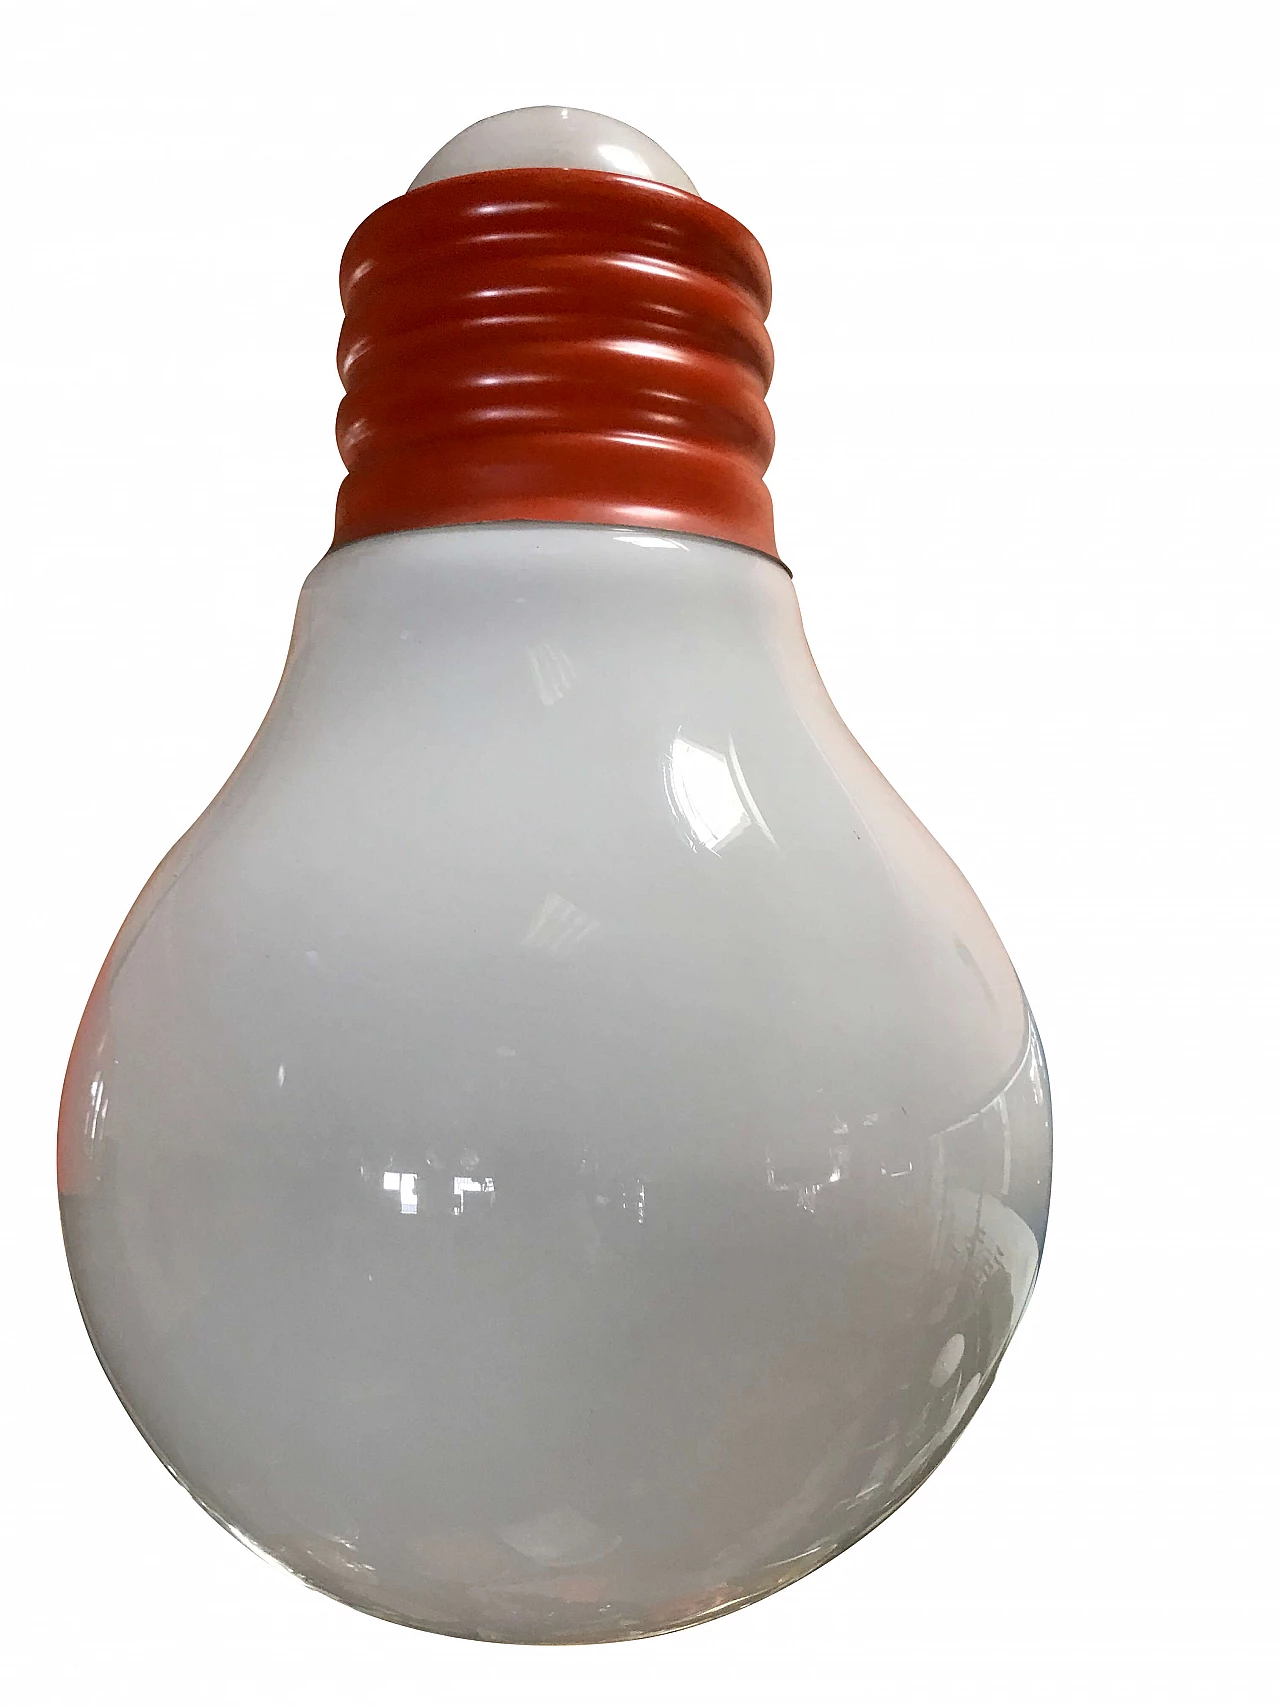 Ceiling lamp in a maxi bulb shape, orange and white, original 70s 1182778